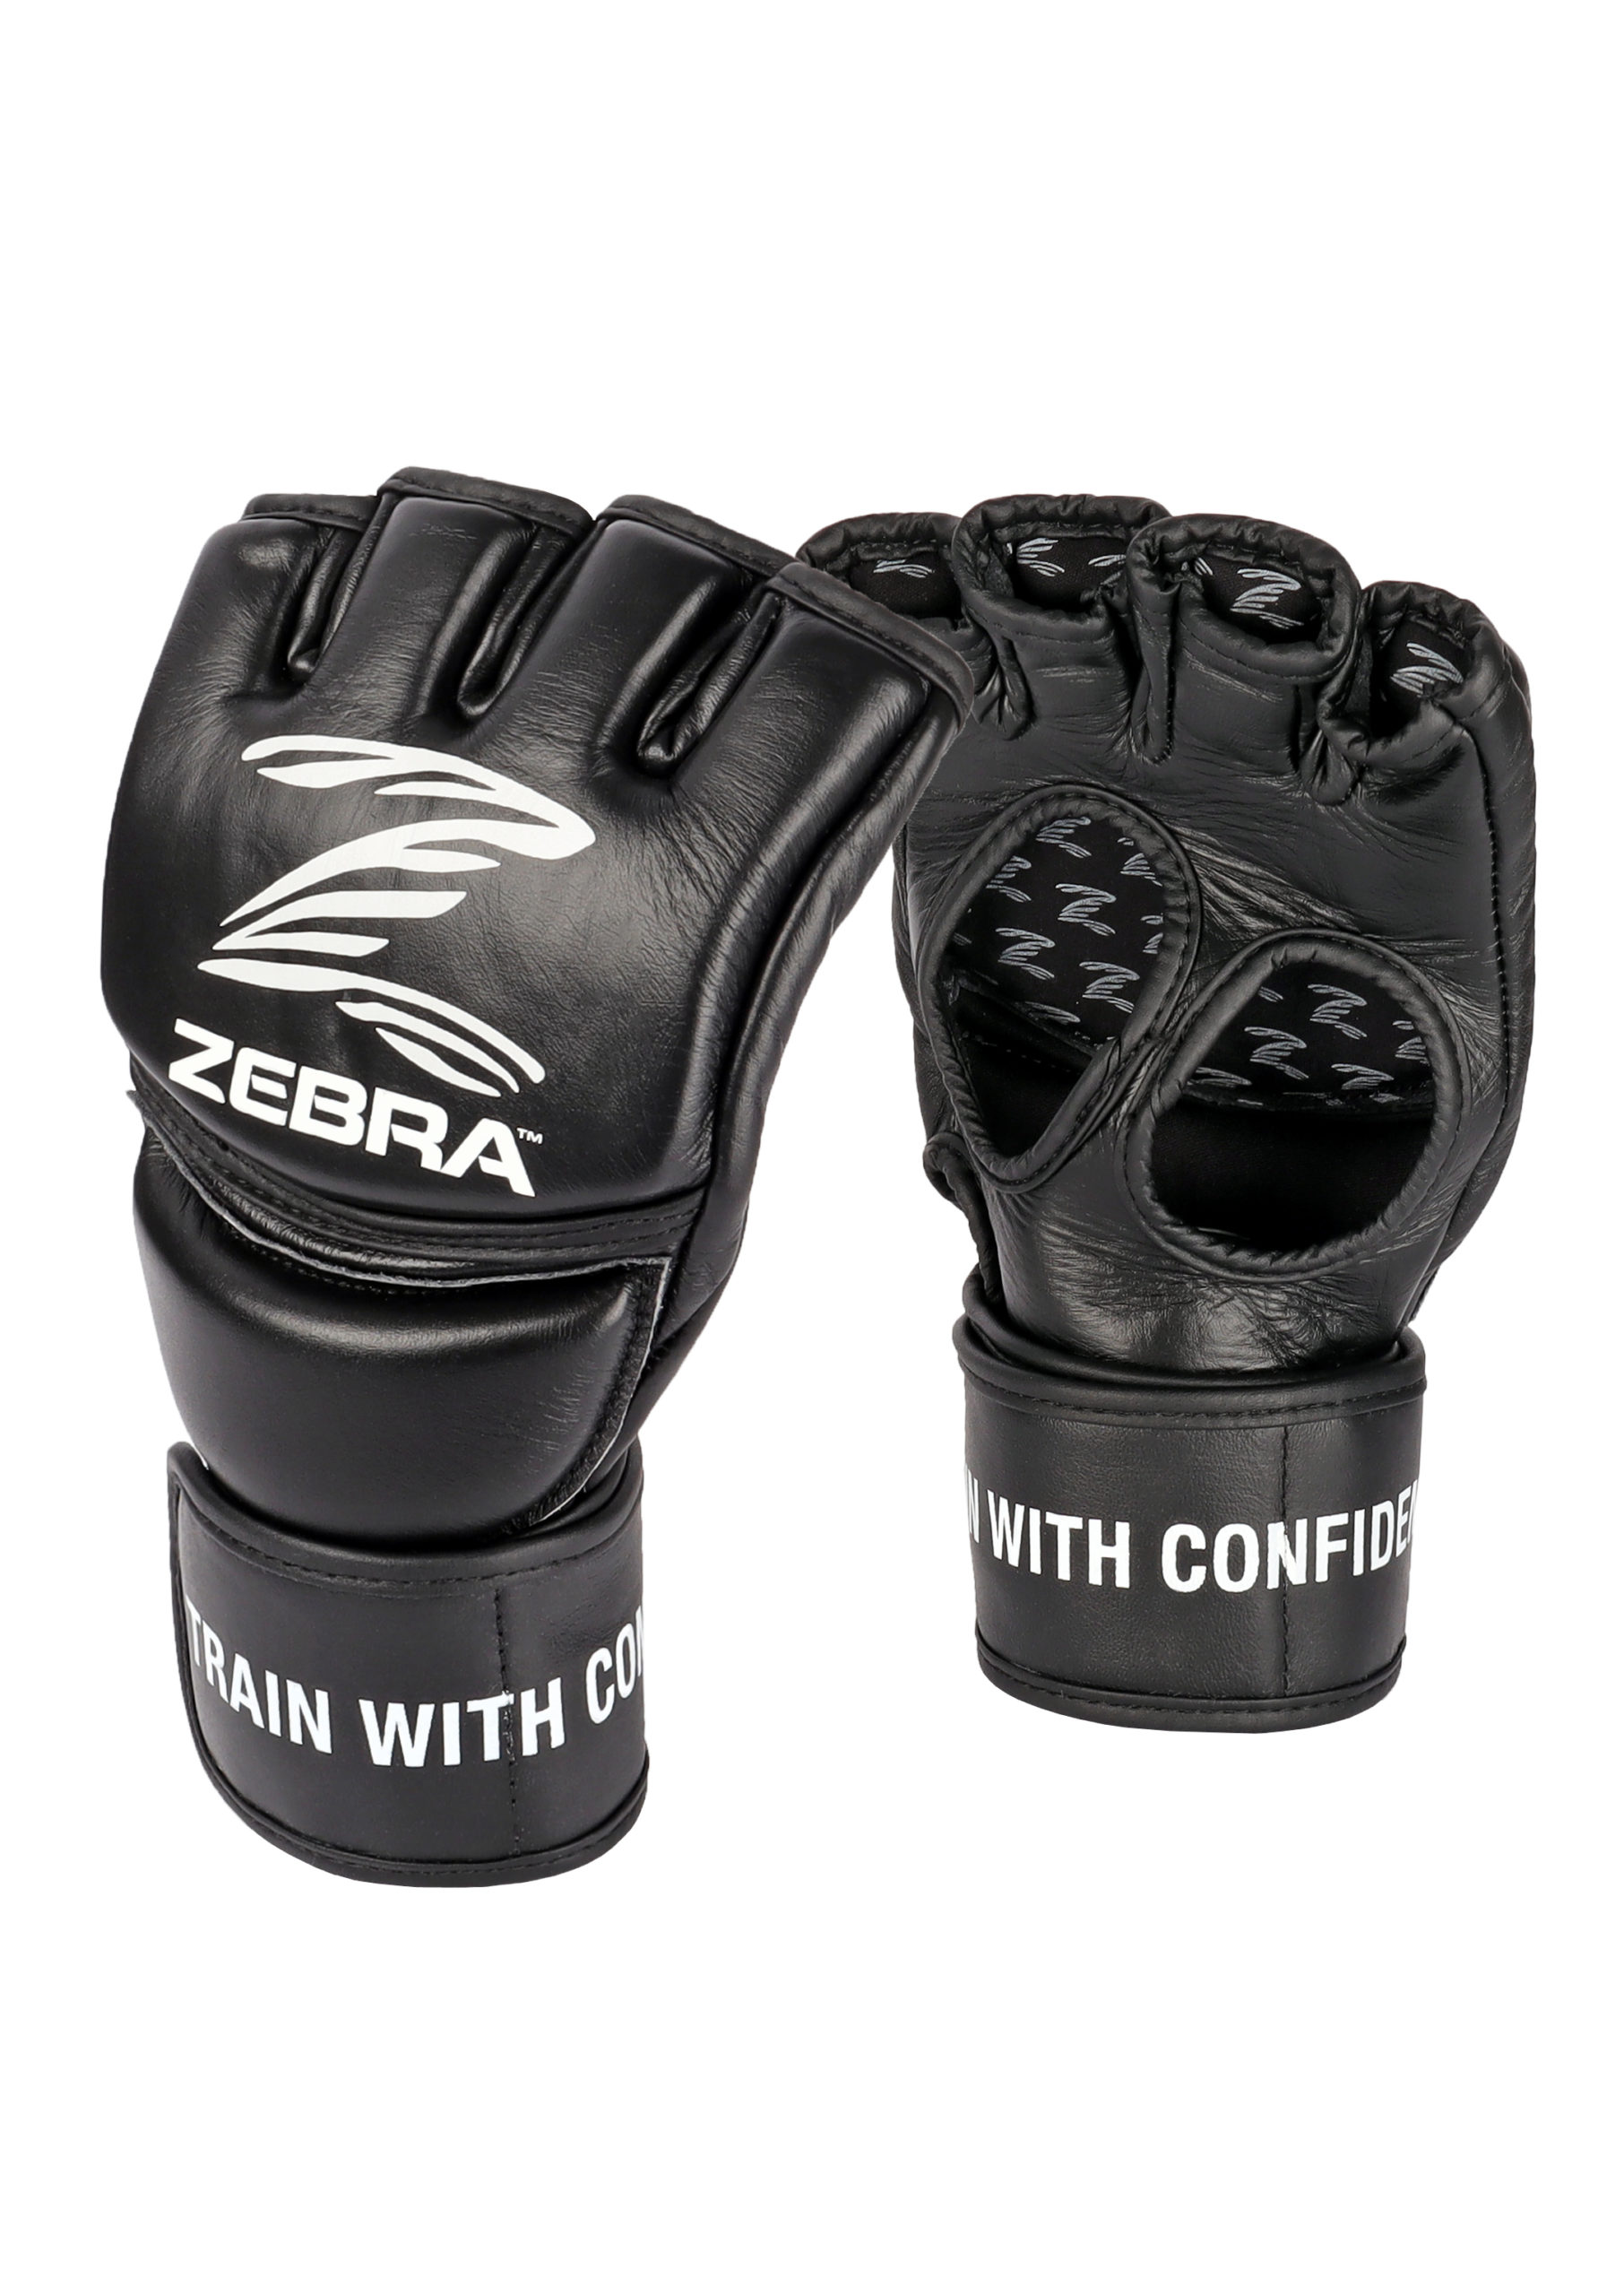 ZEBRA MMA PRO Fight Gloves